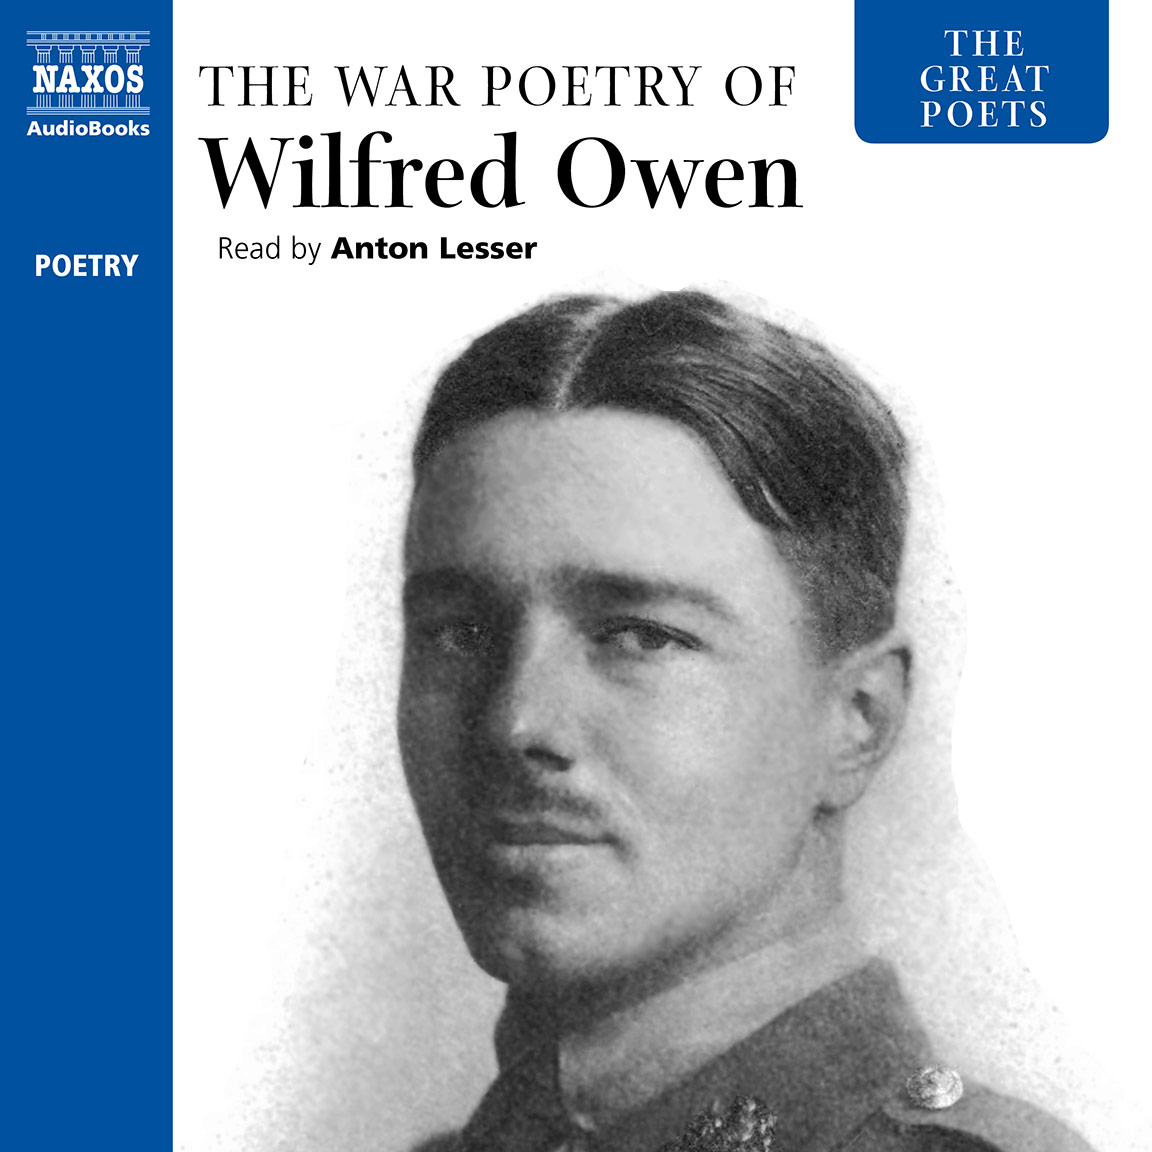 Great Poets: The War Poetry of Wilfred Owen